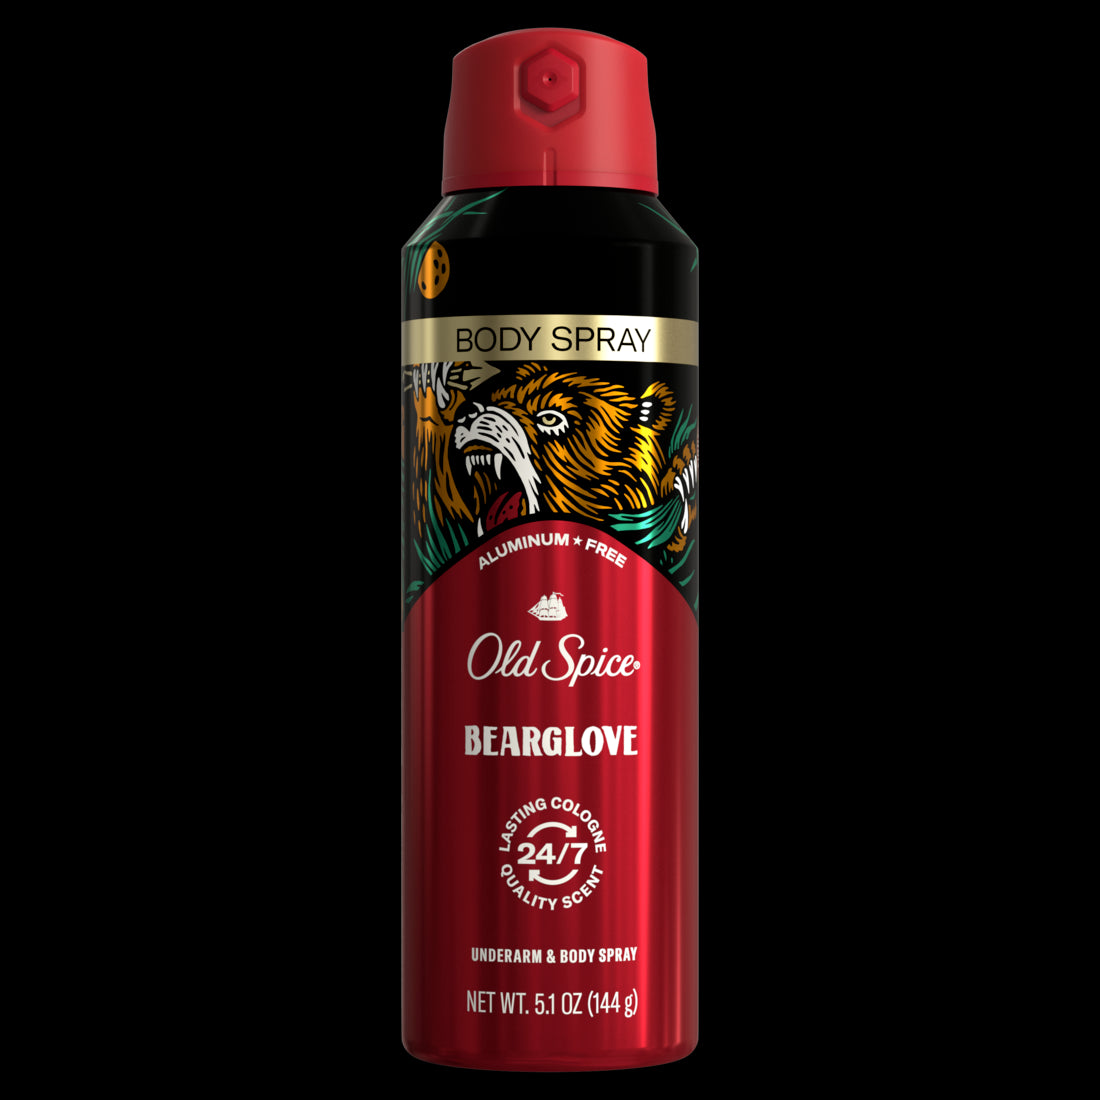 Old Spice Bearglove Body Spray for Men - 5.1oz/12pk